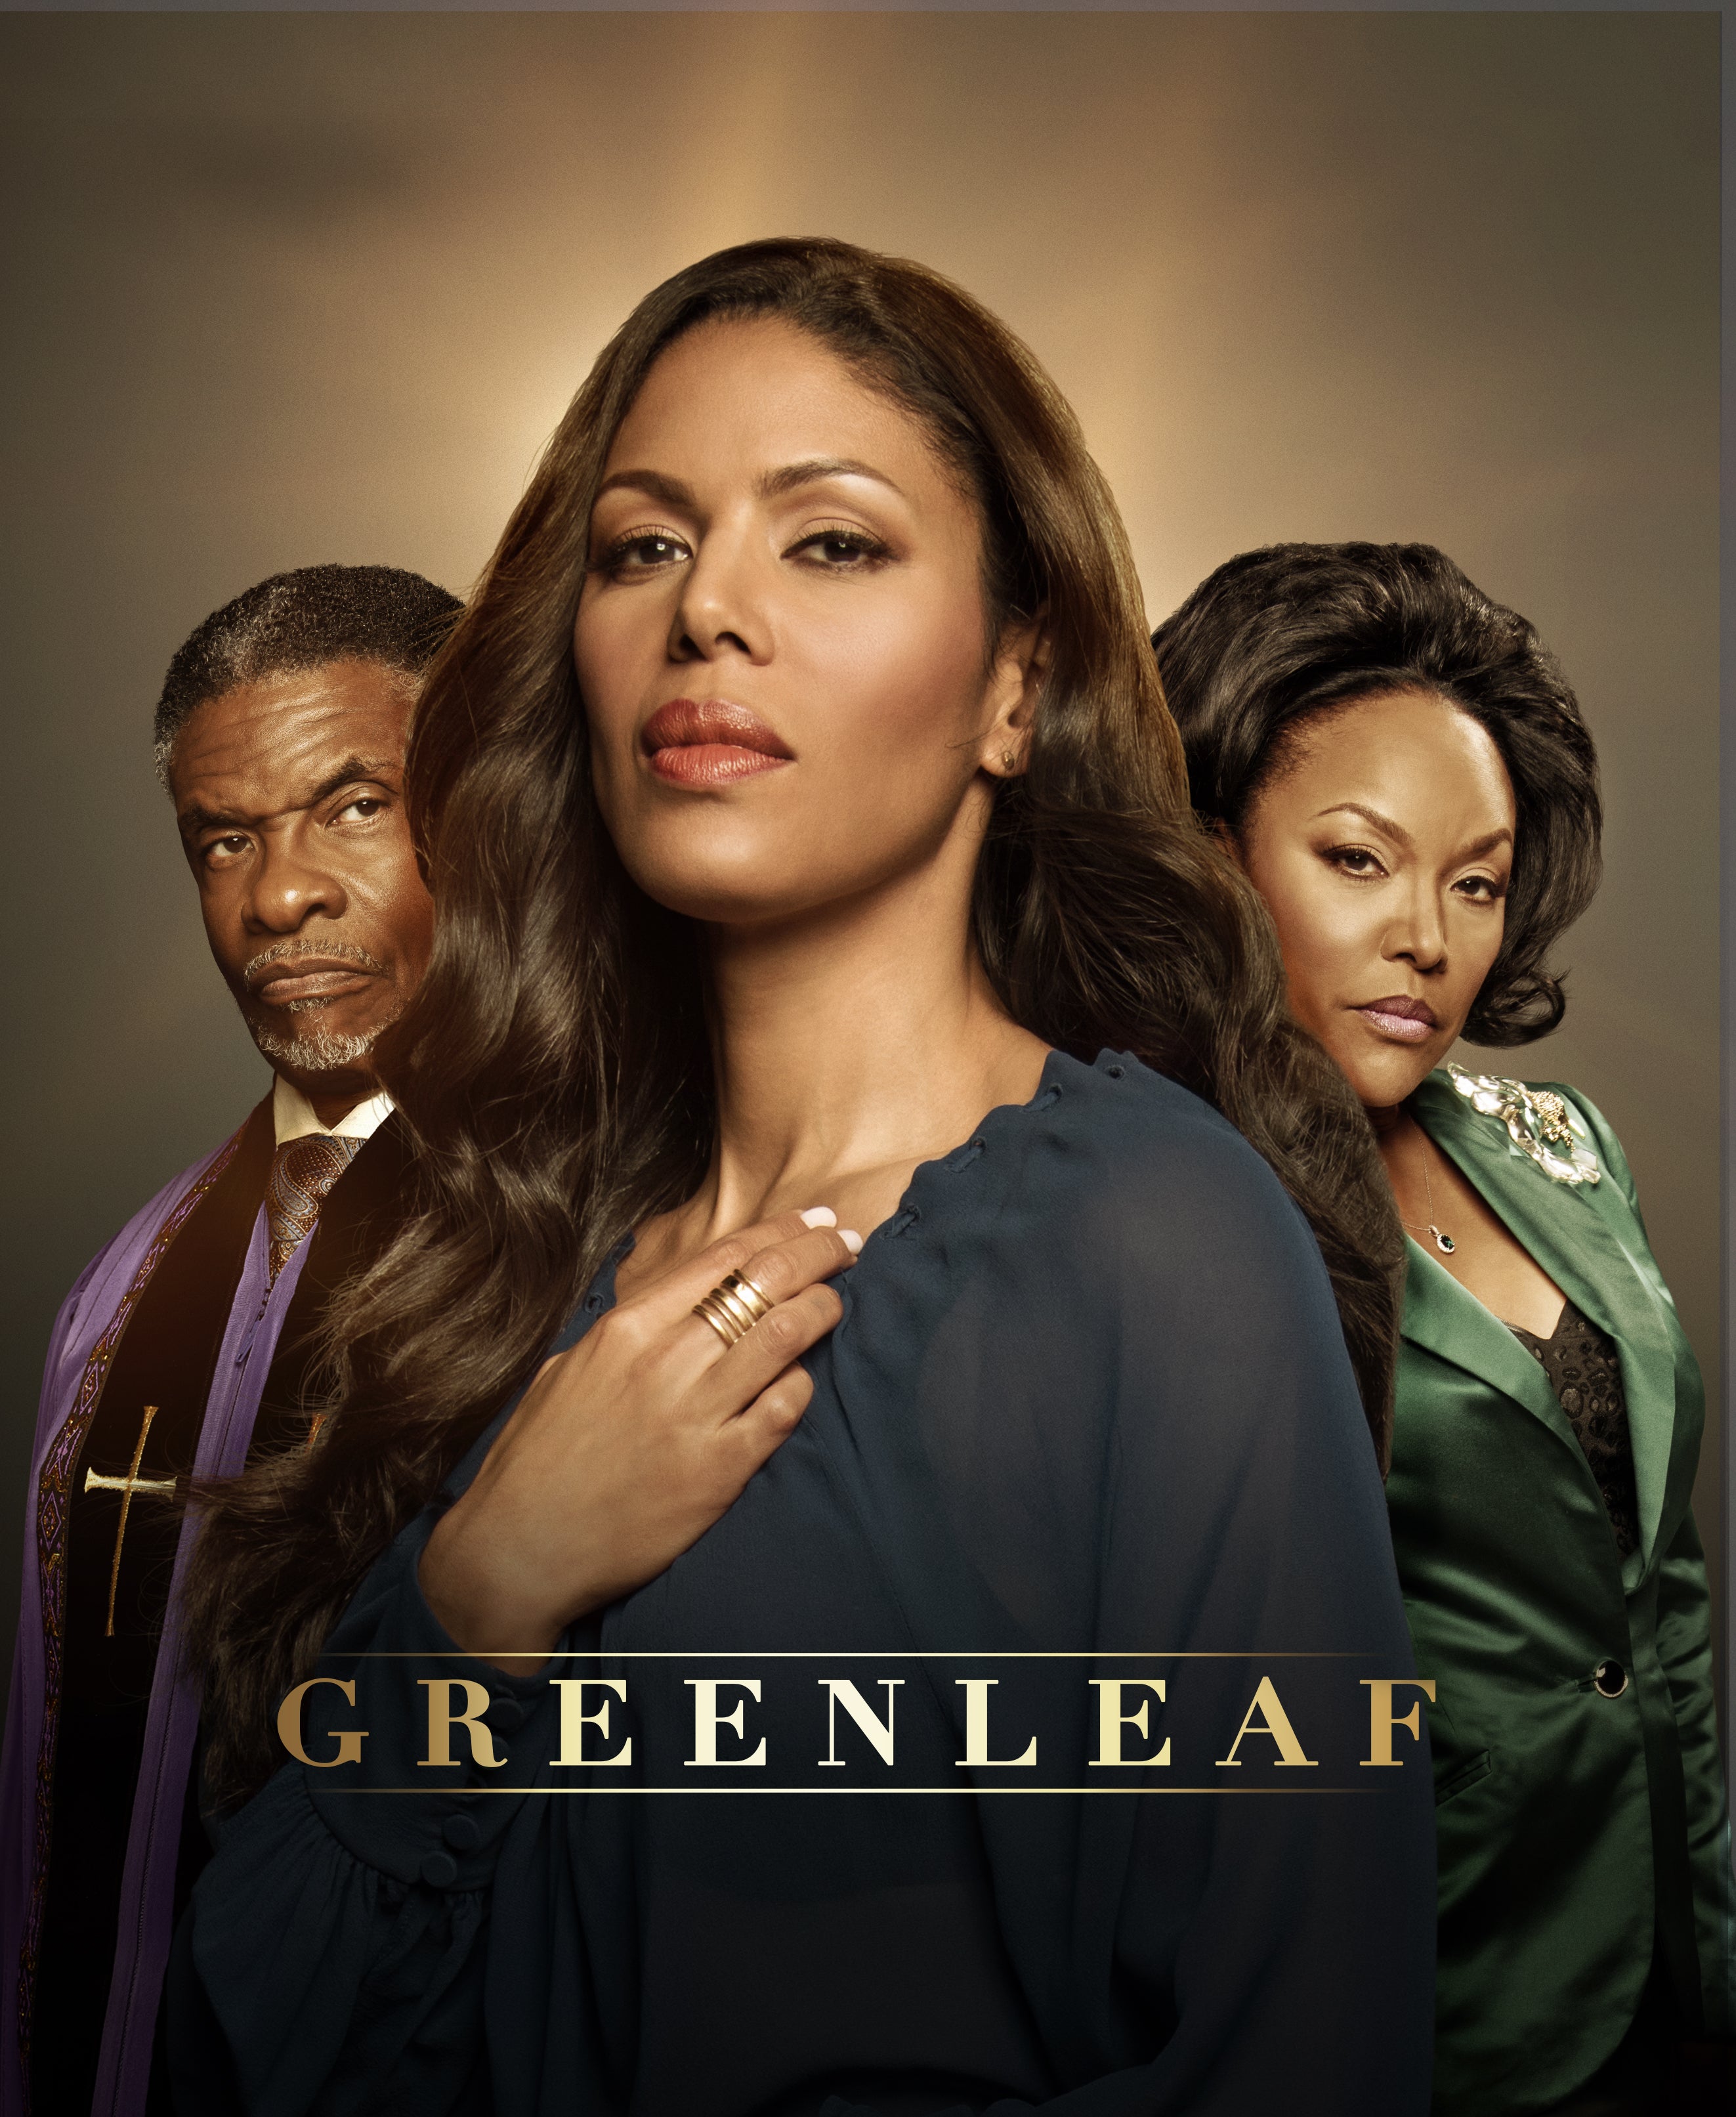 Get Ready For Some Drama! 'Greenleaf' Sets Mid-Season Return Date
